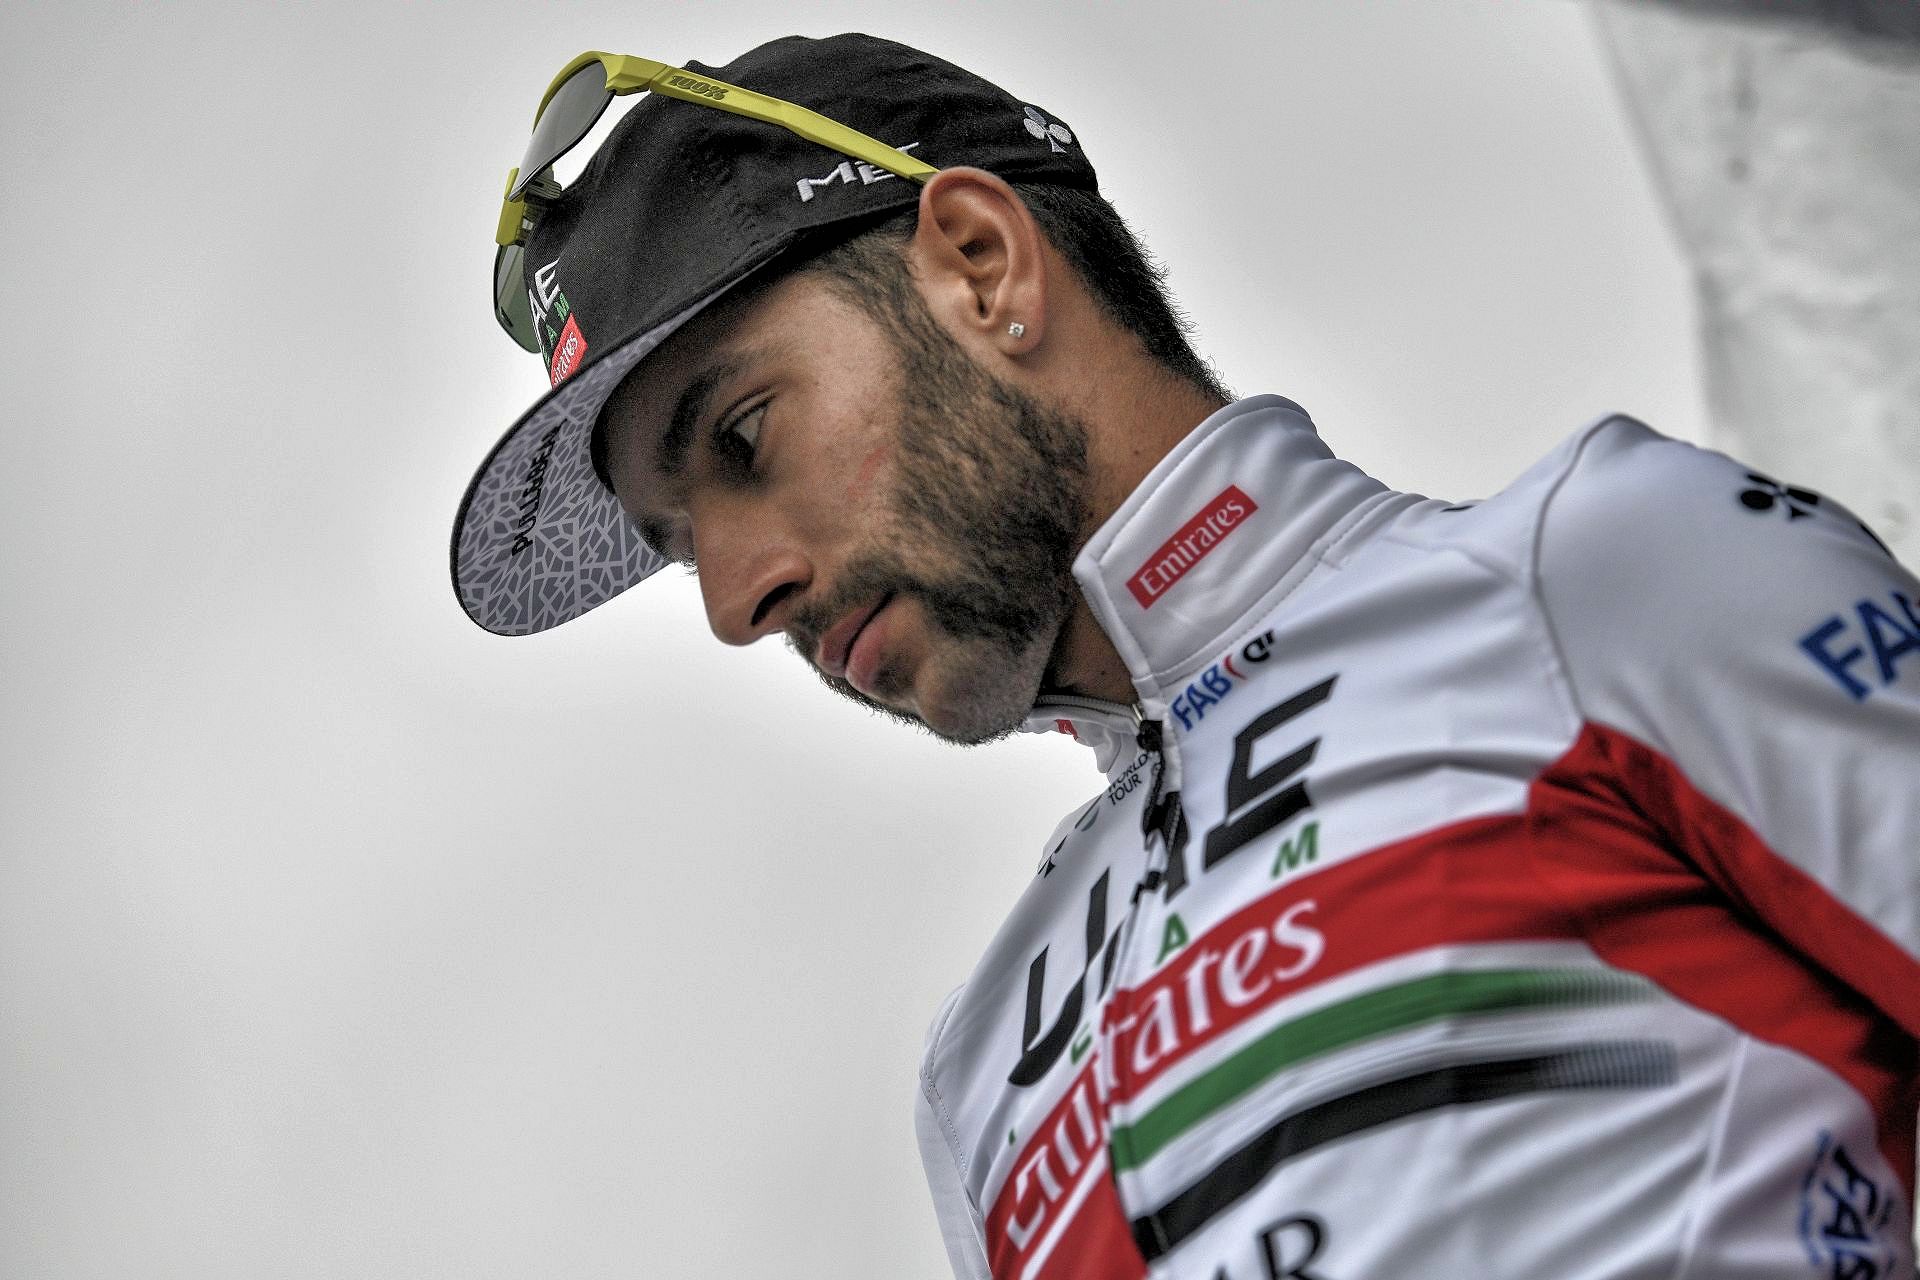 Vuelta a San Juan 2020: etap 2. Fernando Gaviria włączył licznik